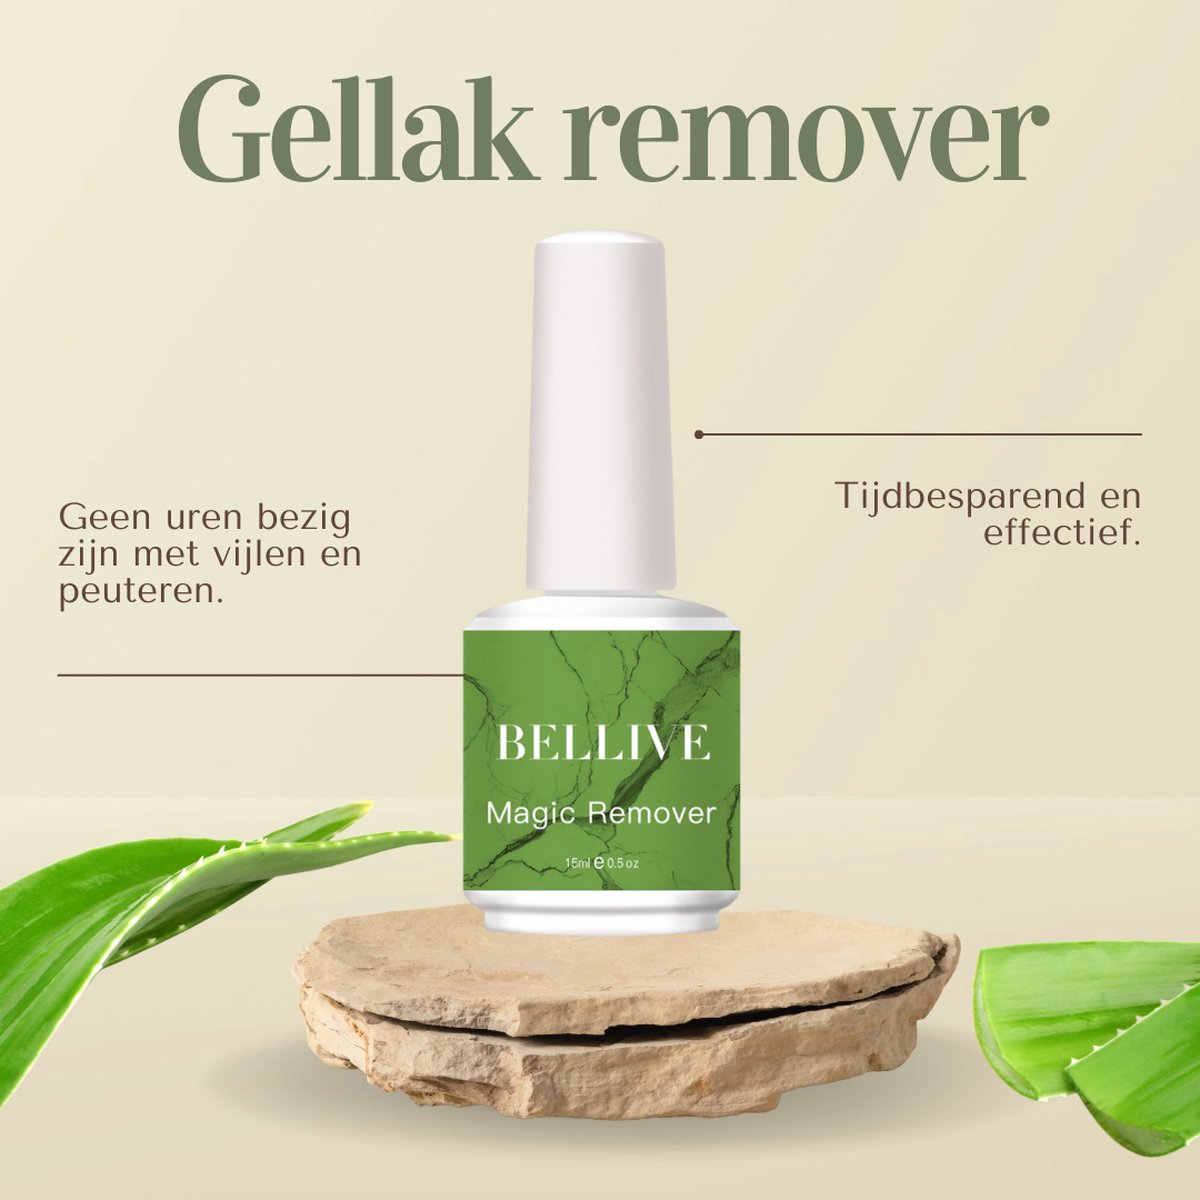 Magic soak off nailpolish remover - Gellak remover - Gellak cleaner - Gellak verwijderen - Gellak remover - 15ml